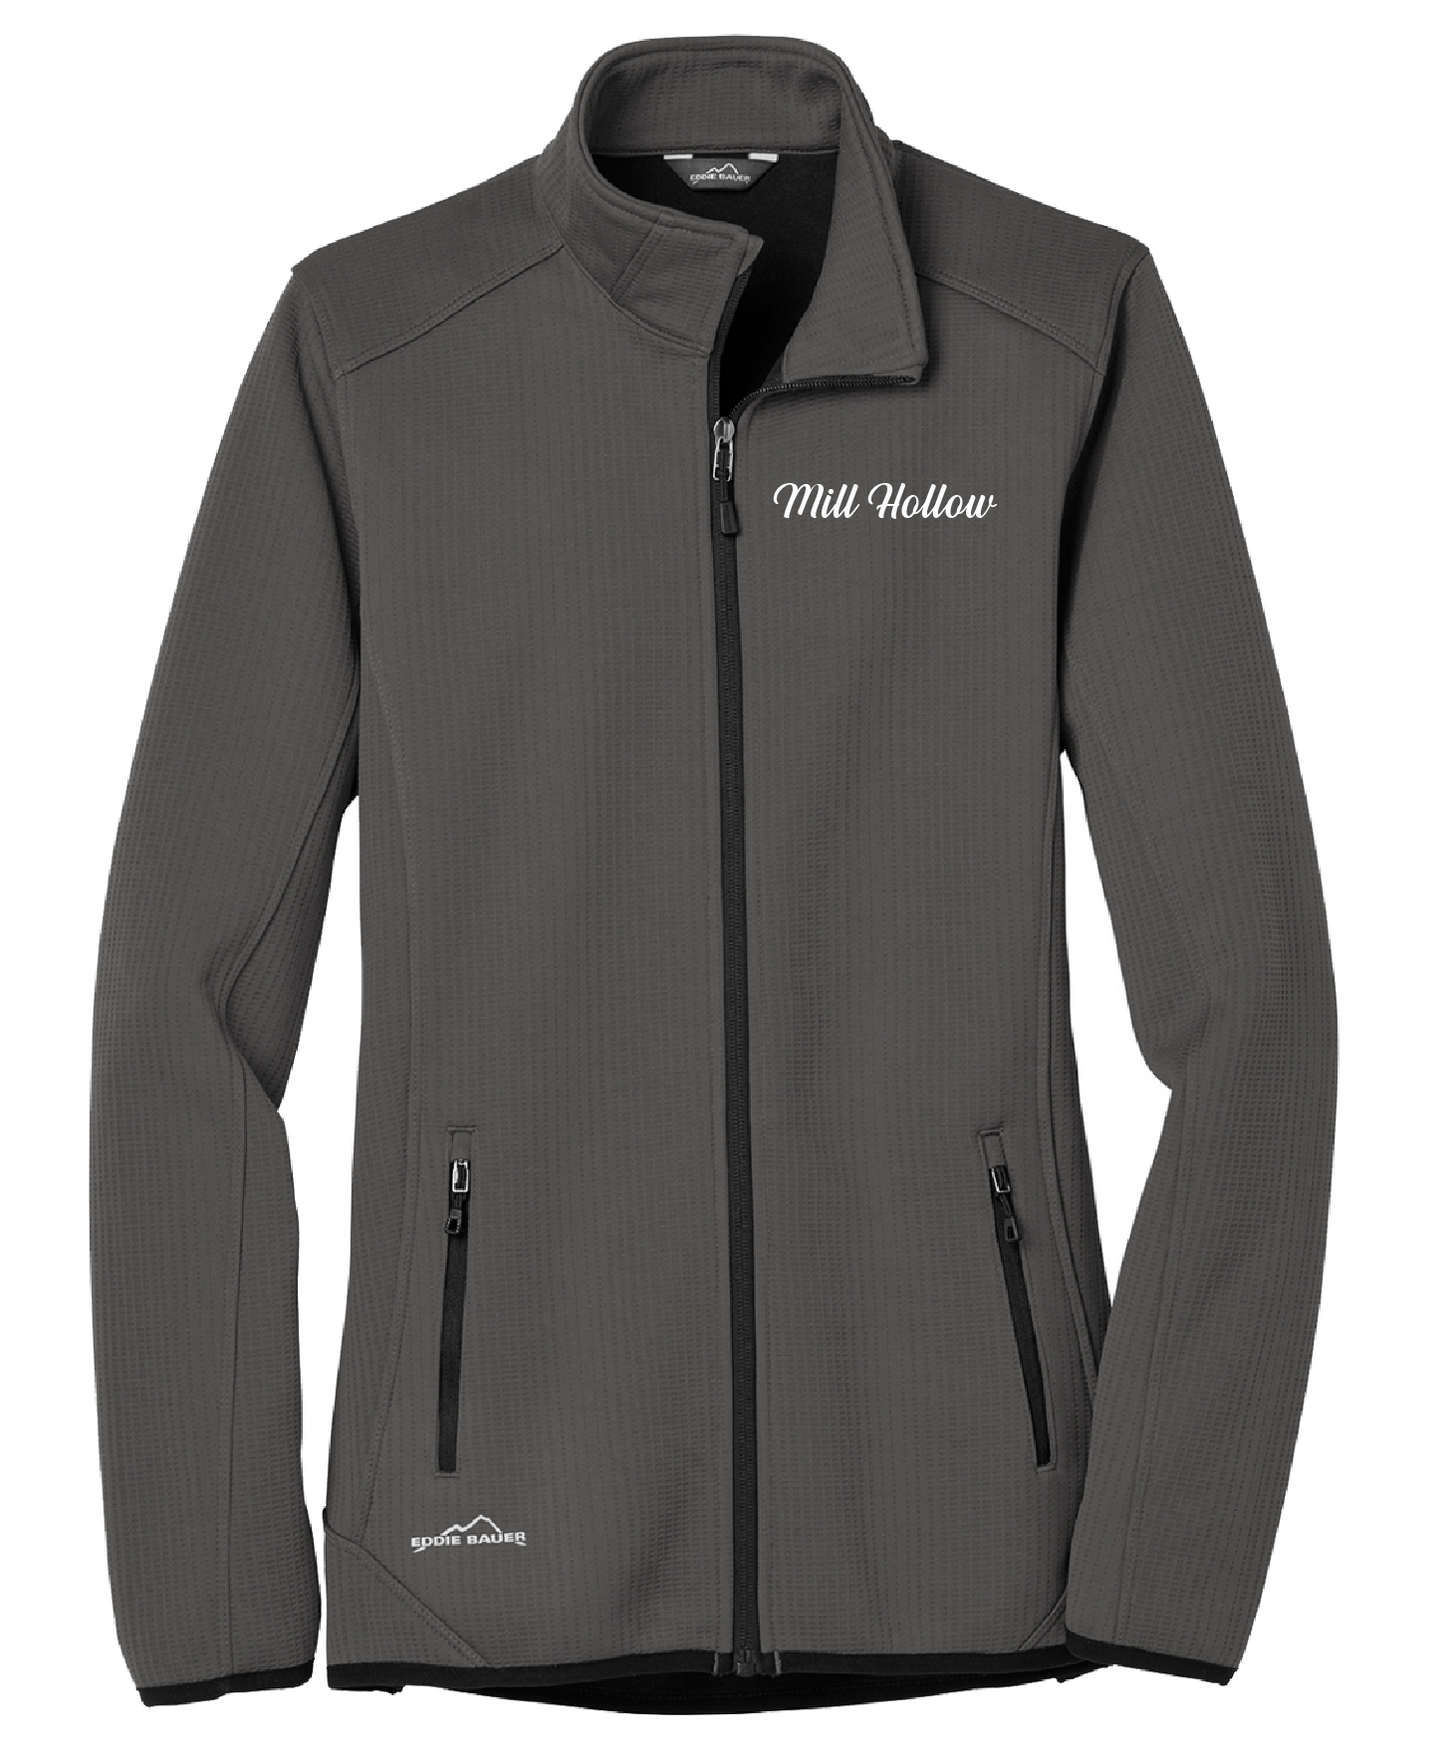 Mill Hollow - Ladies - Eddie Bauer ® Dash Full-Zip Fleece Jacket